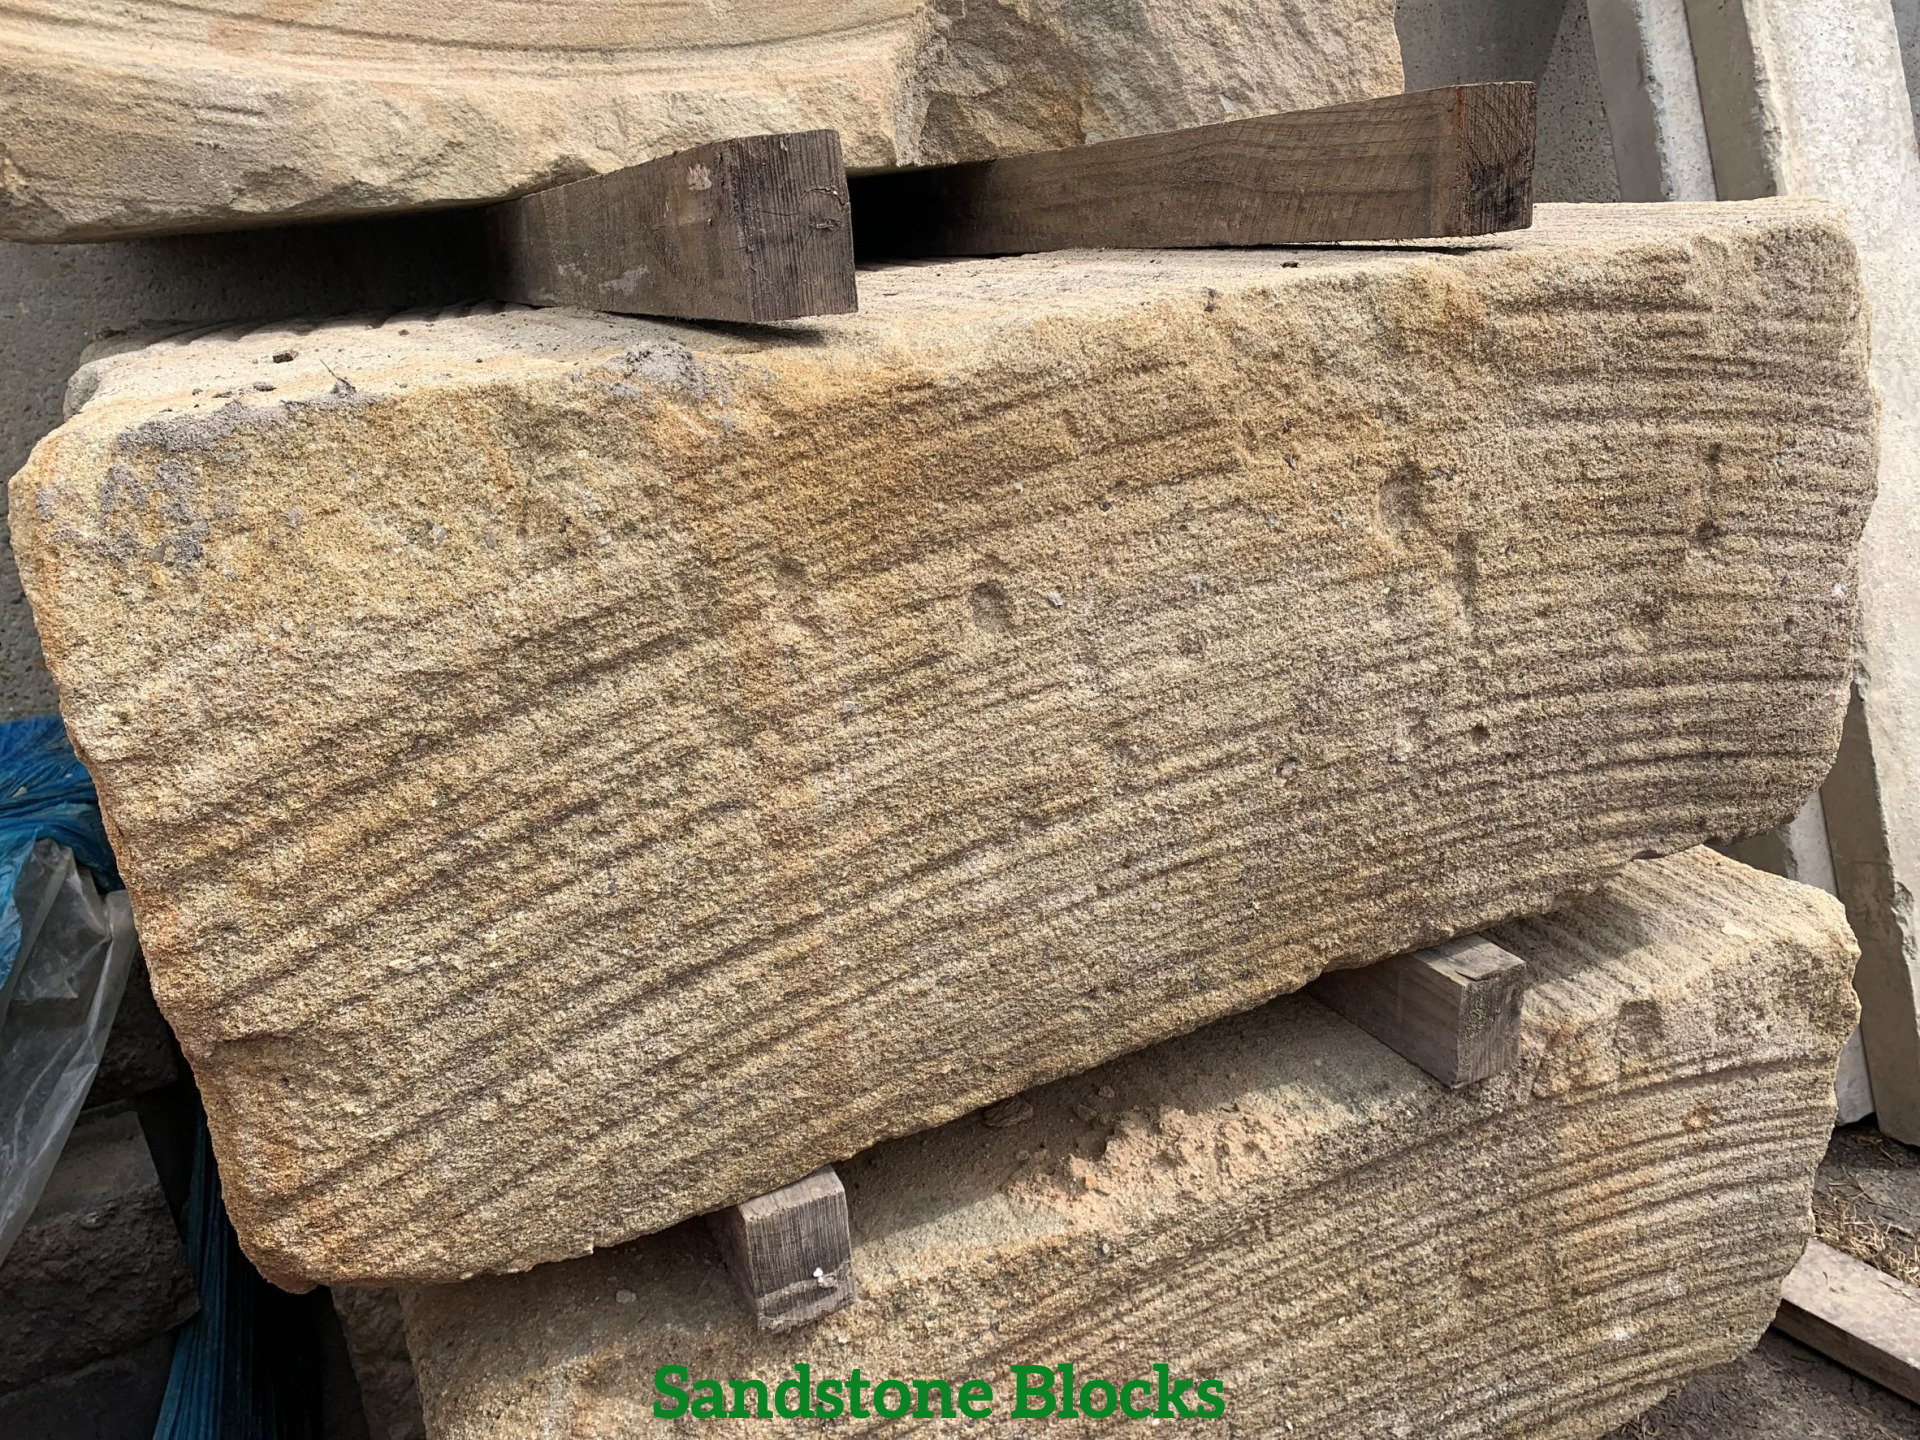 Sandstone Black — Landscaping Supplies in Maclean, NSW